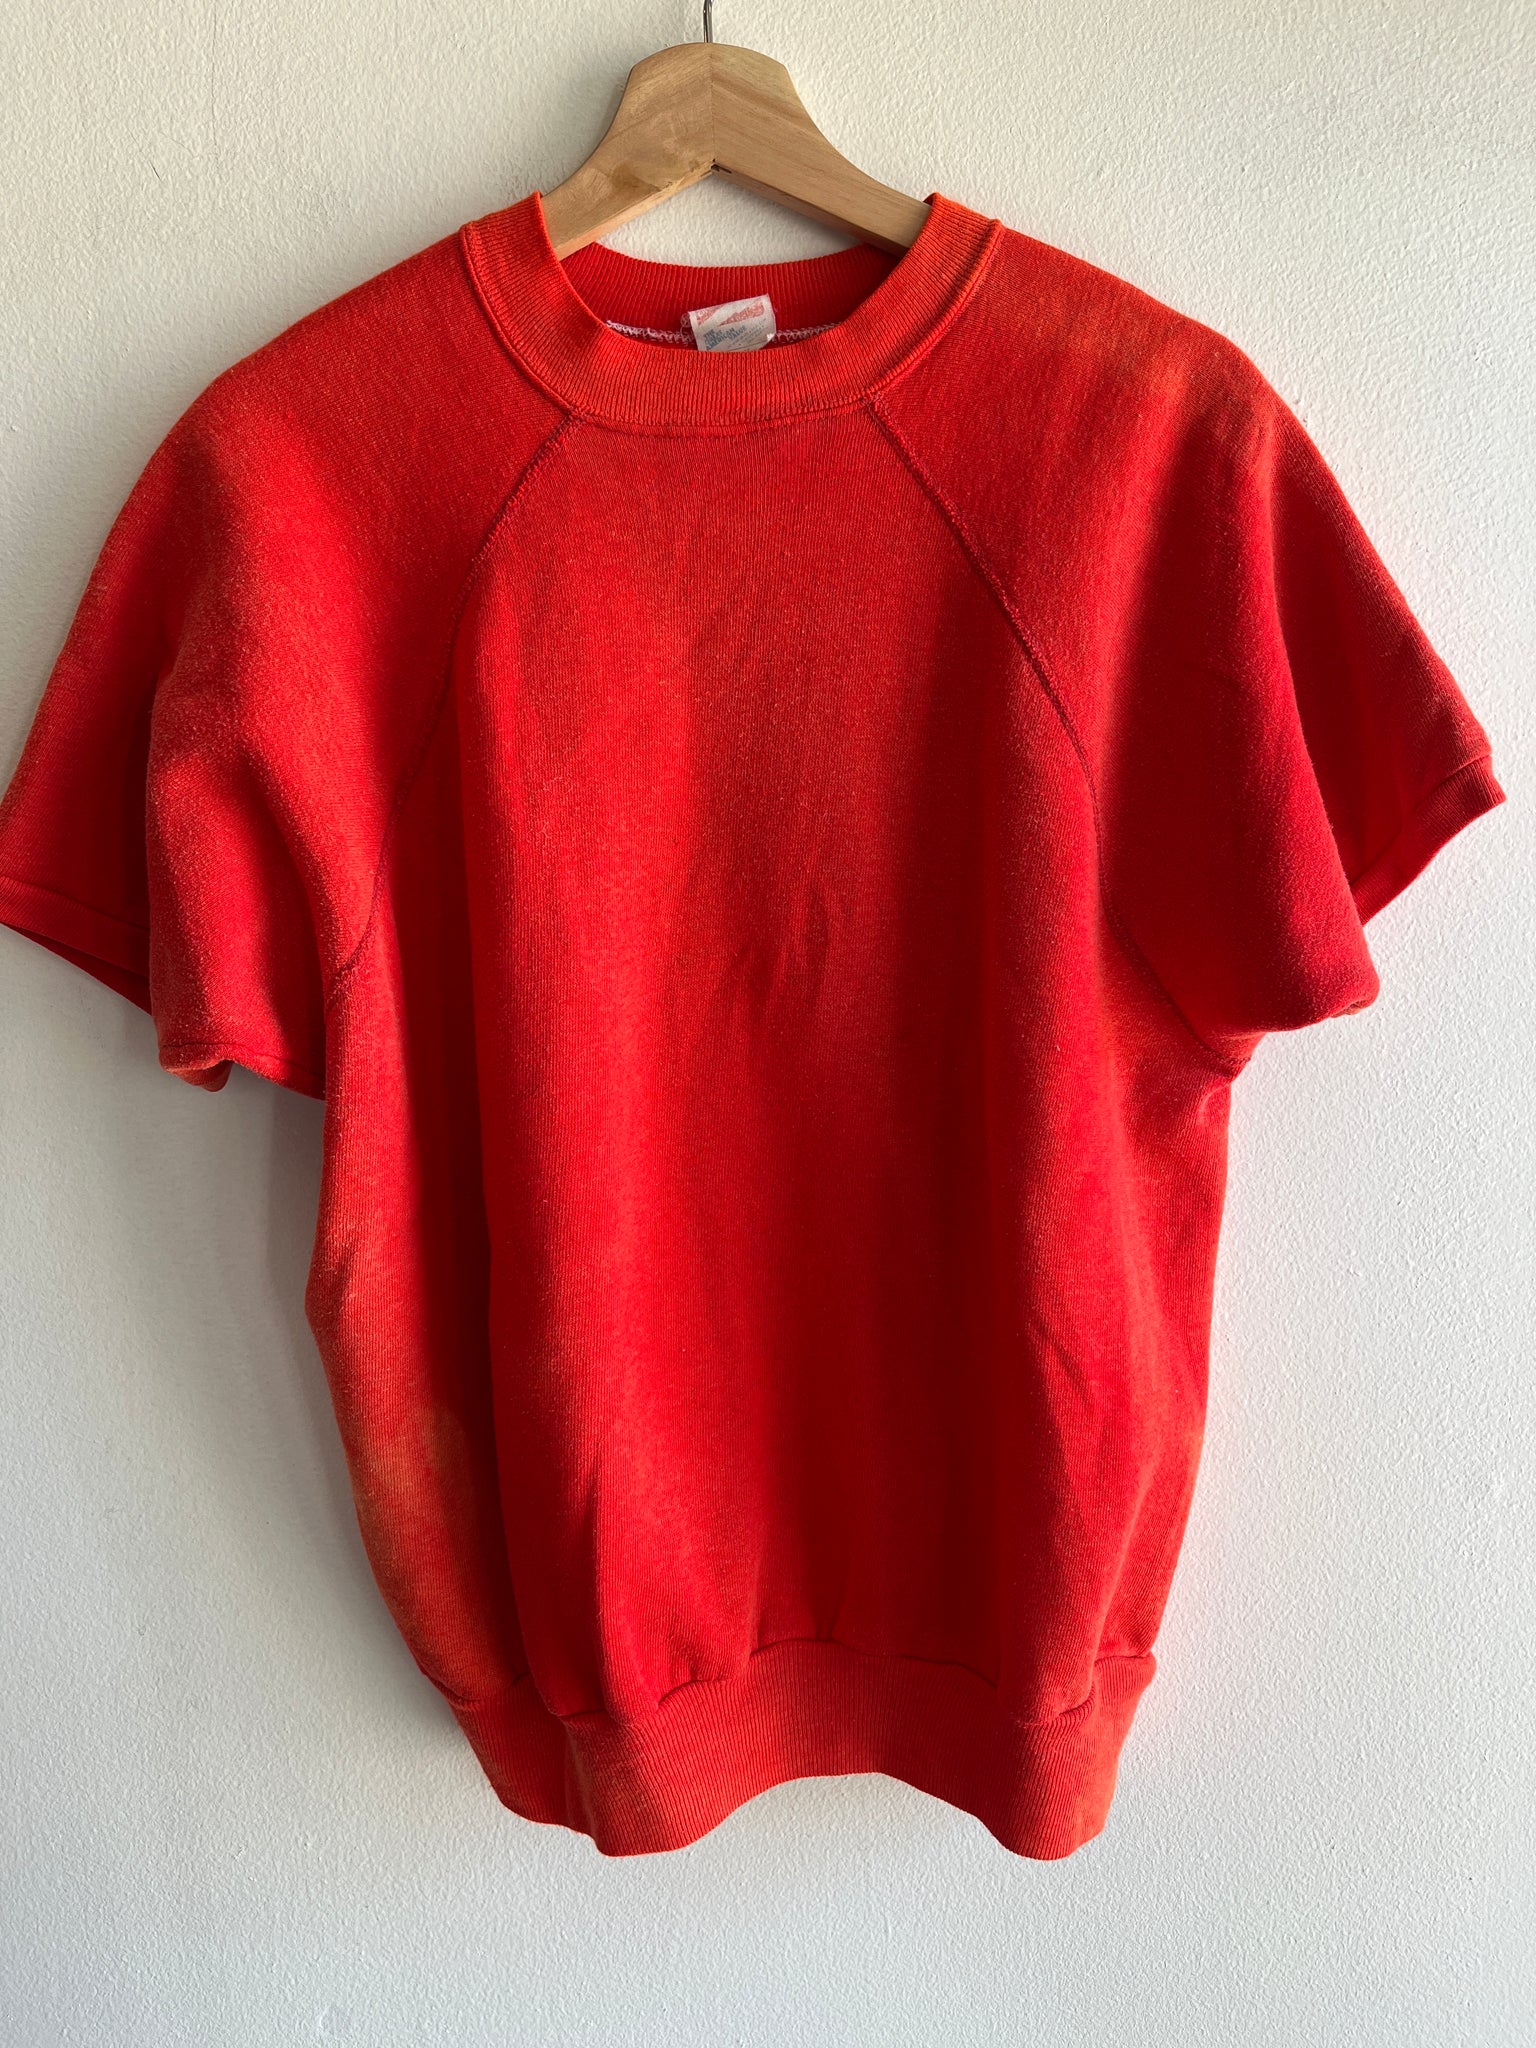 Vintage 1970’s Sunfaded Red Short-Sleeved Sweatshirt